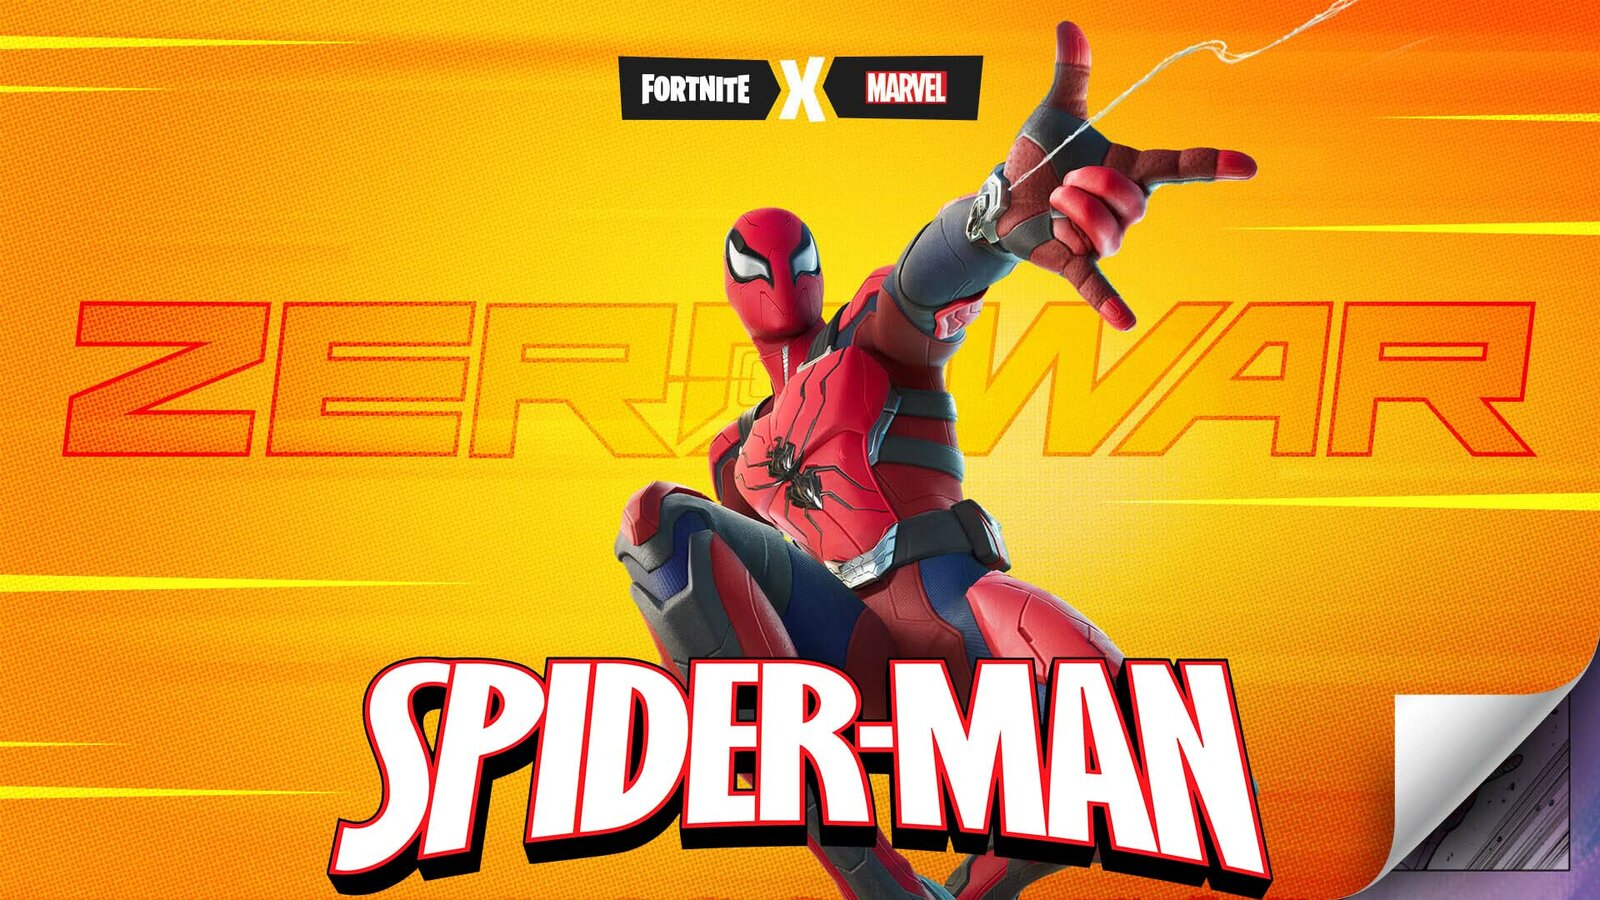 Fortnite - Spider-Man Zero Outfit